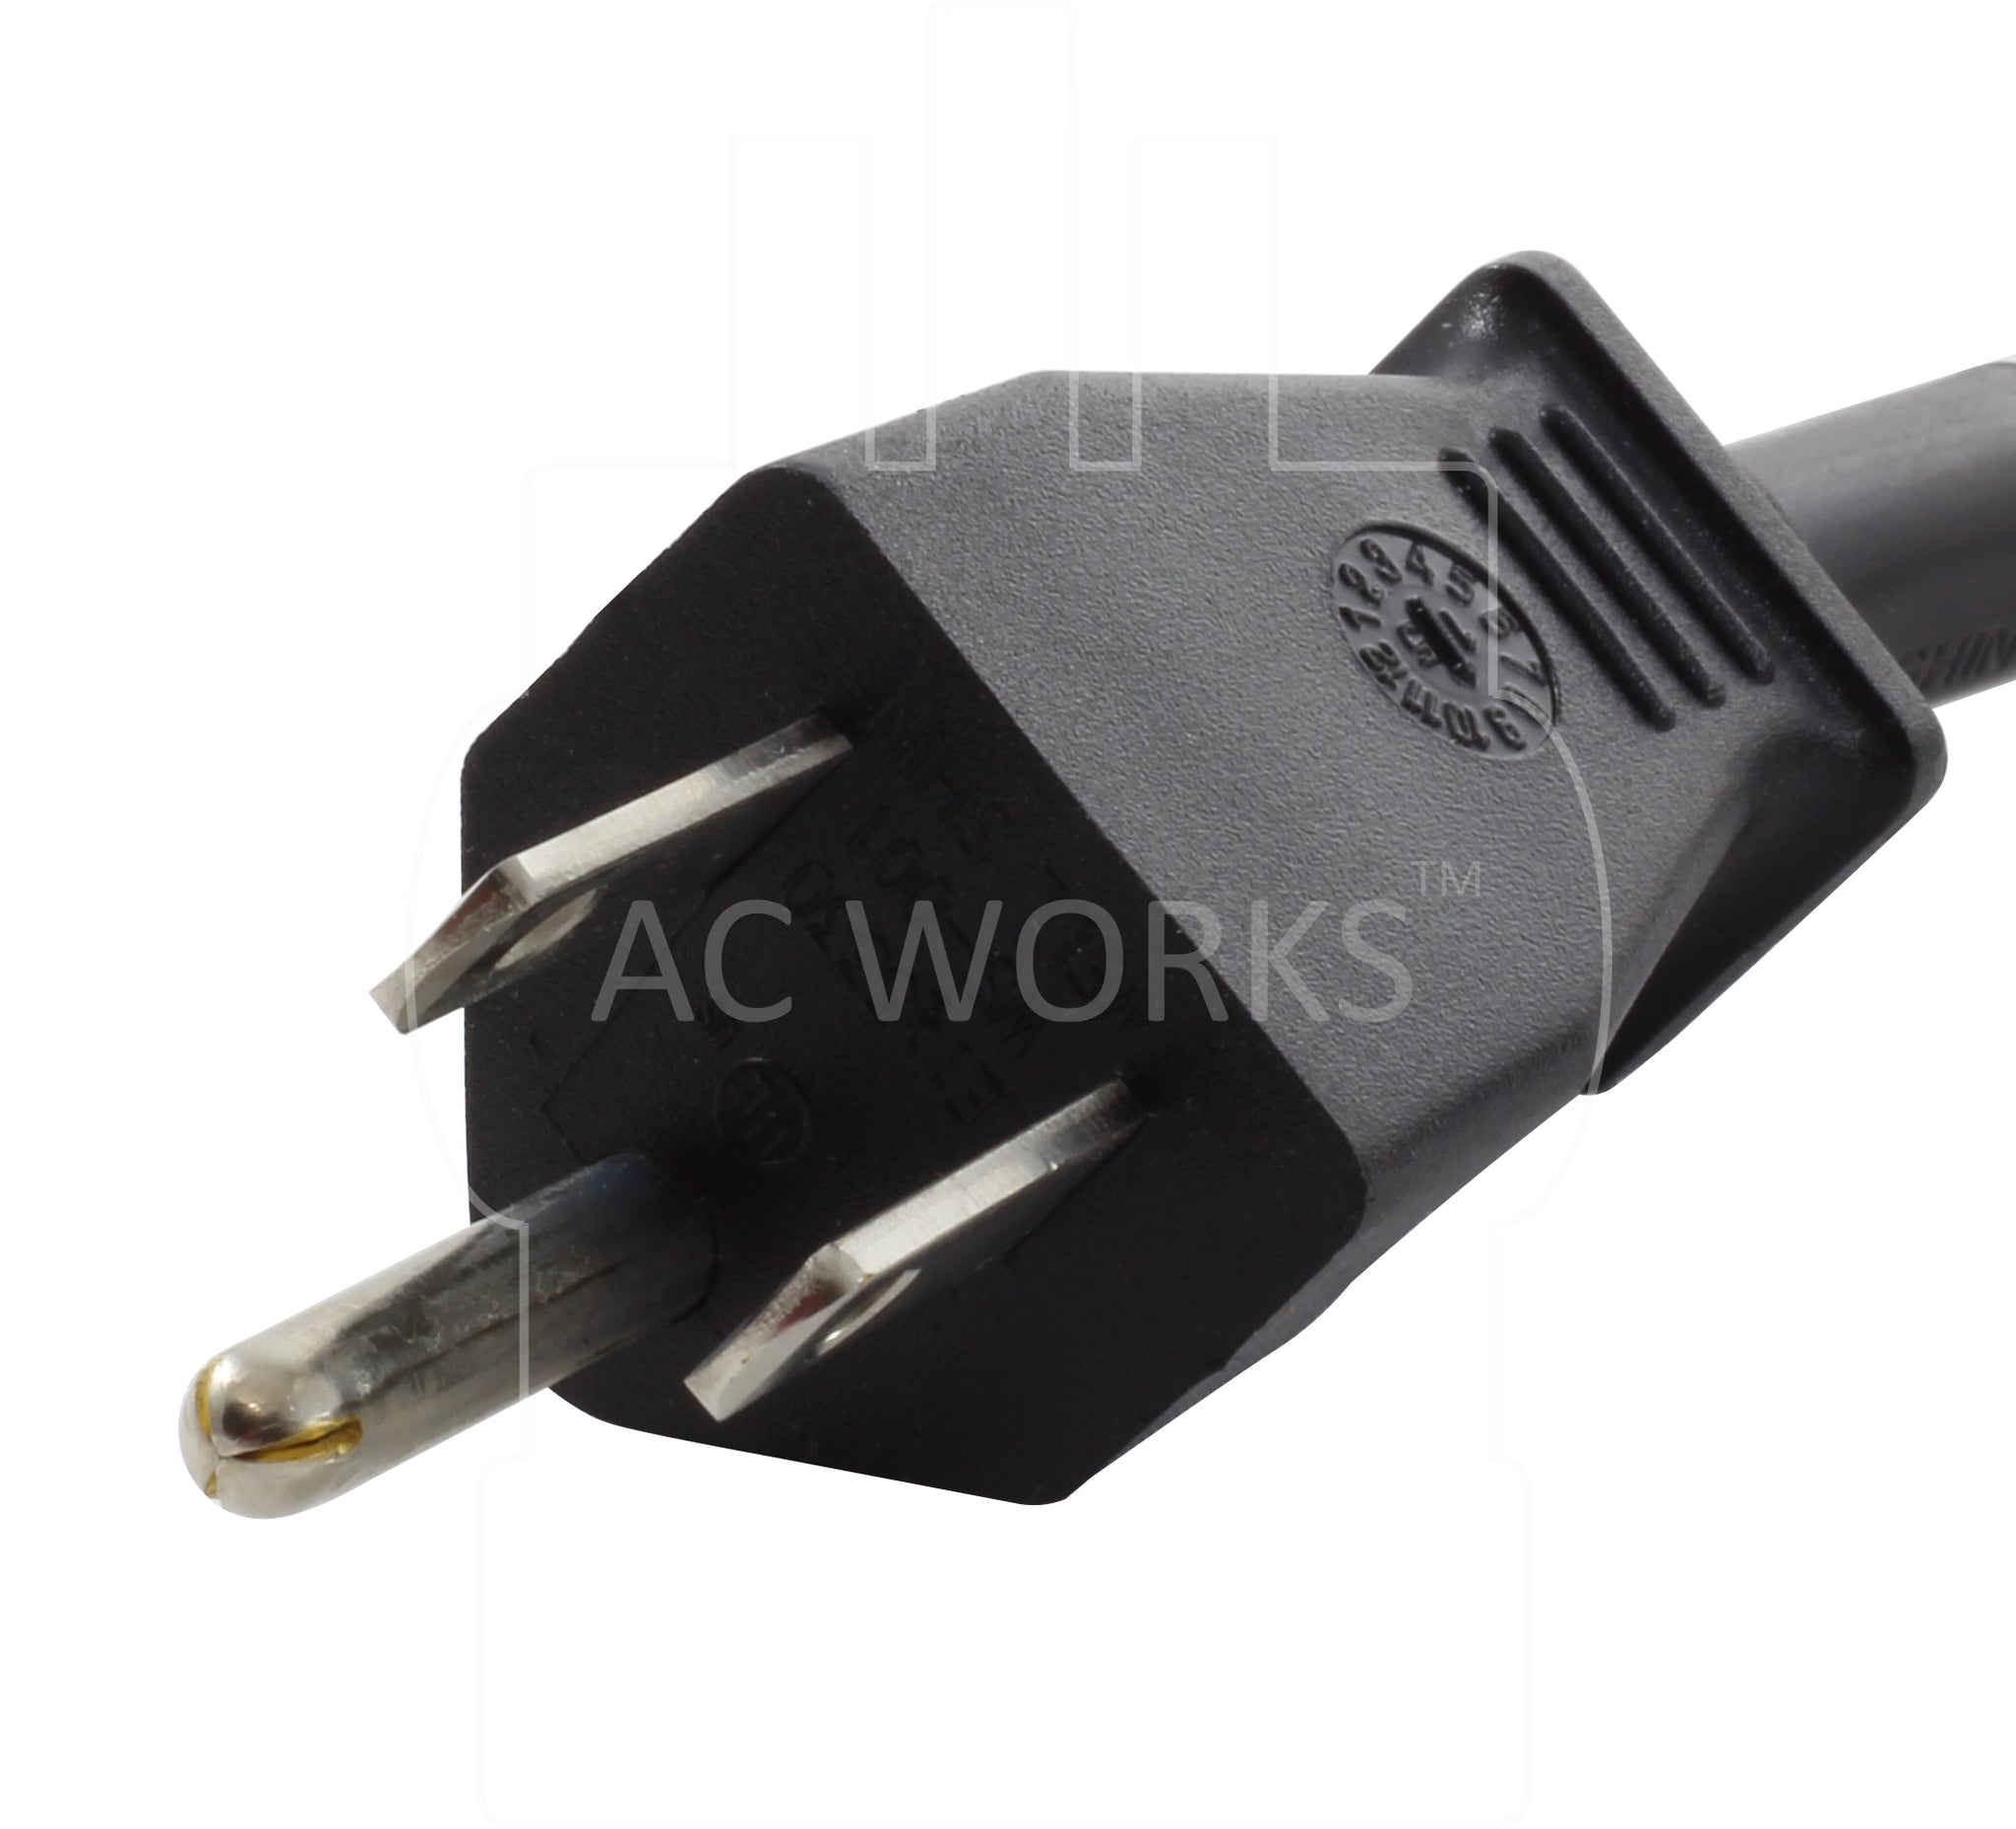 AC Works 15 Amp NEMA 5-15 10 Foot Locking Extension Cord